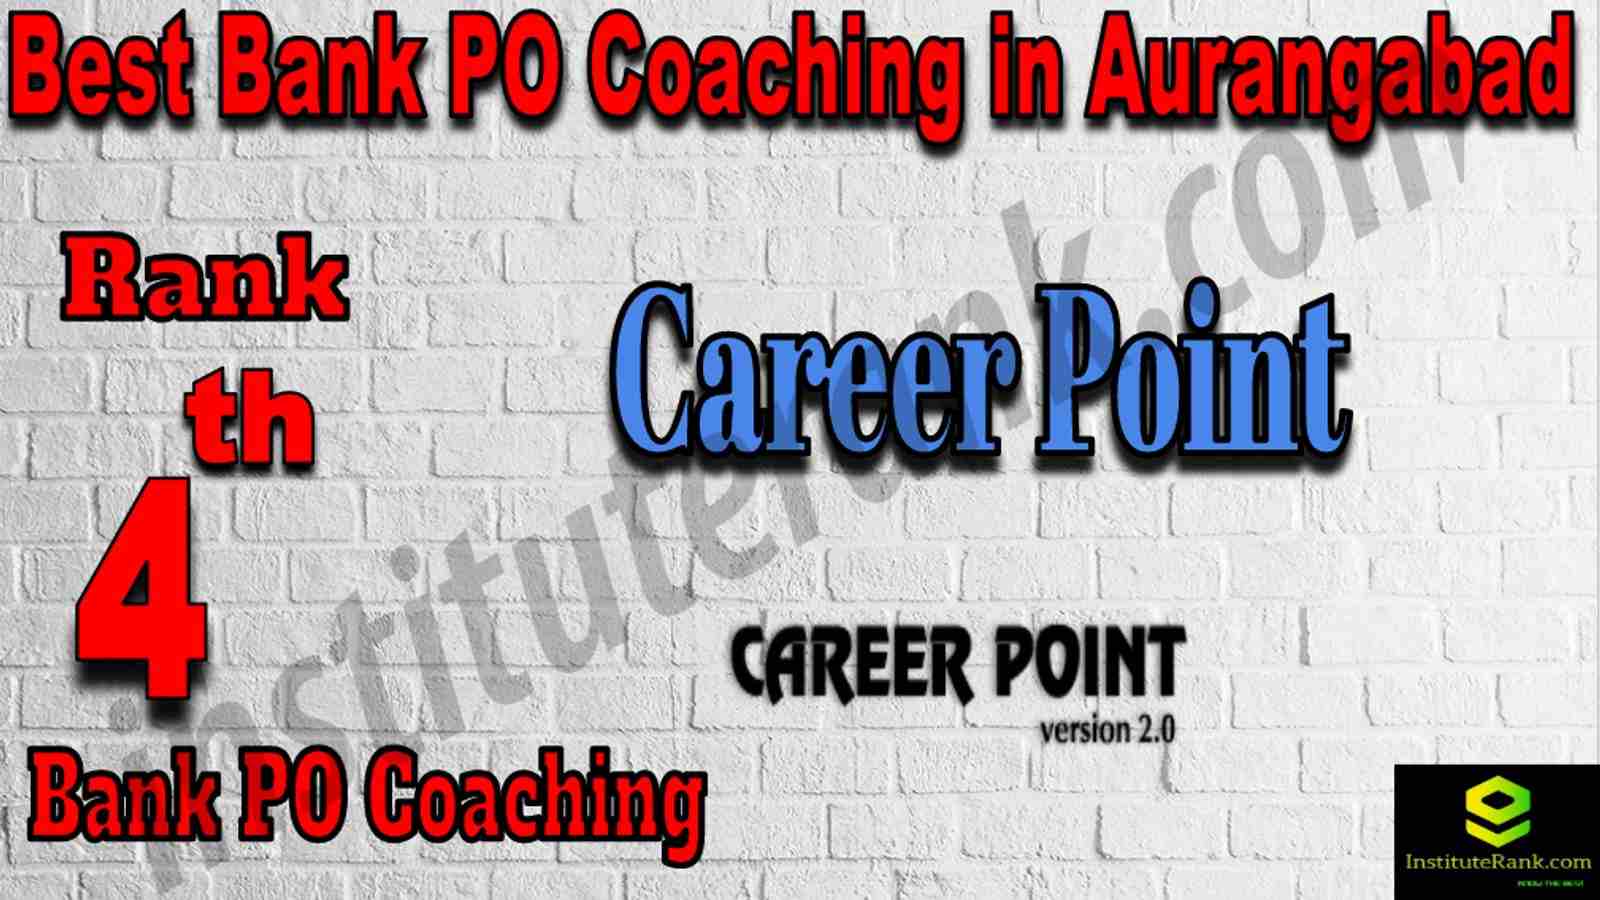 4th Best Bank PO Coaching in Aurangabad